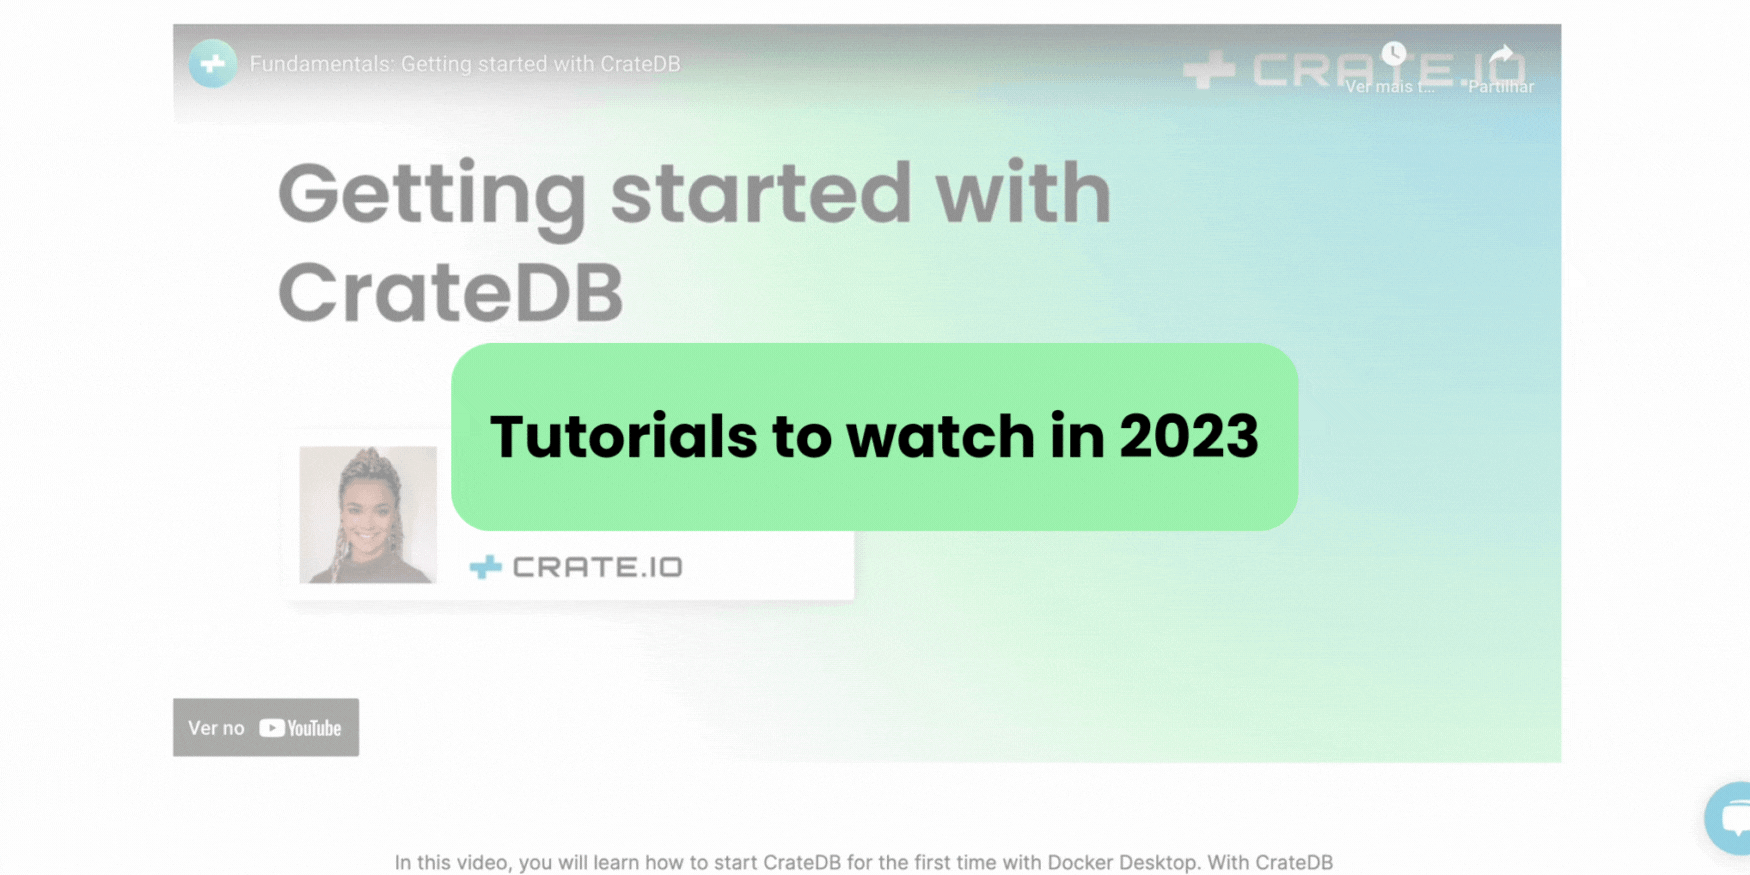 CrateDB 2023 tutorials